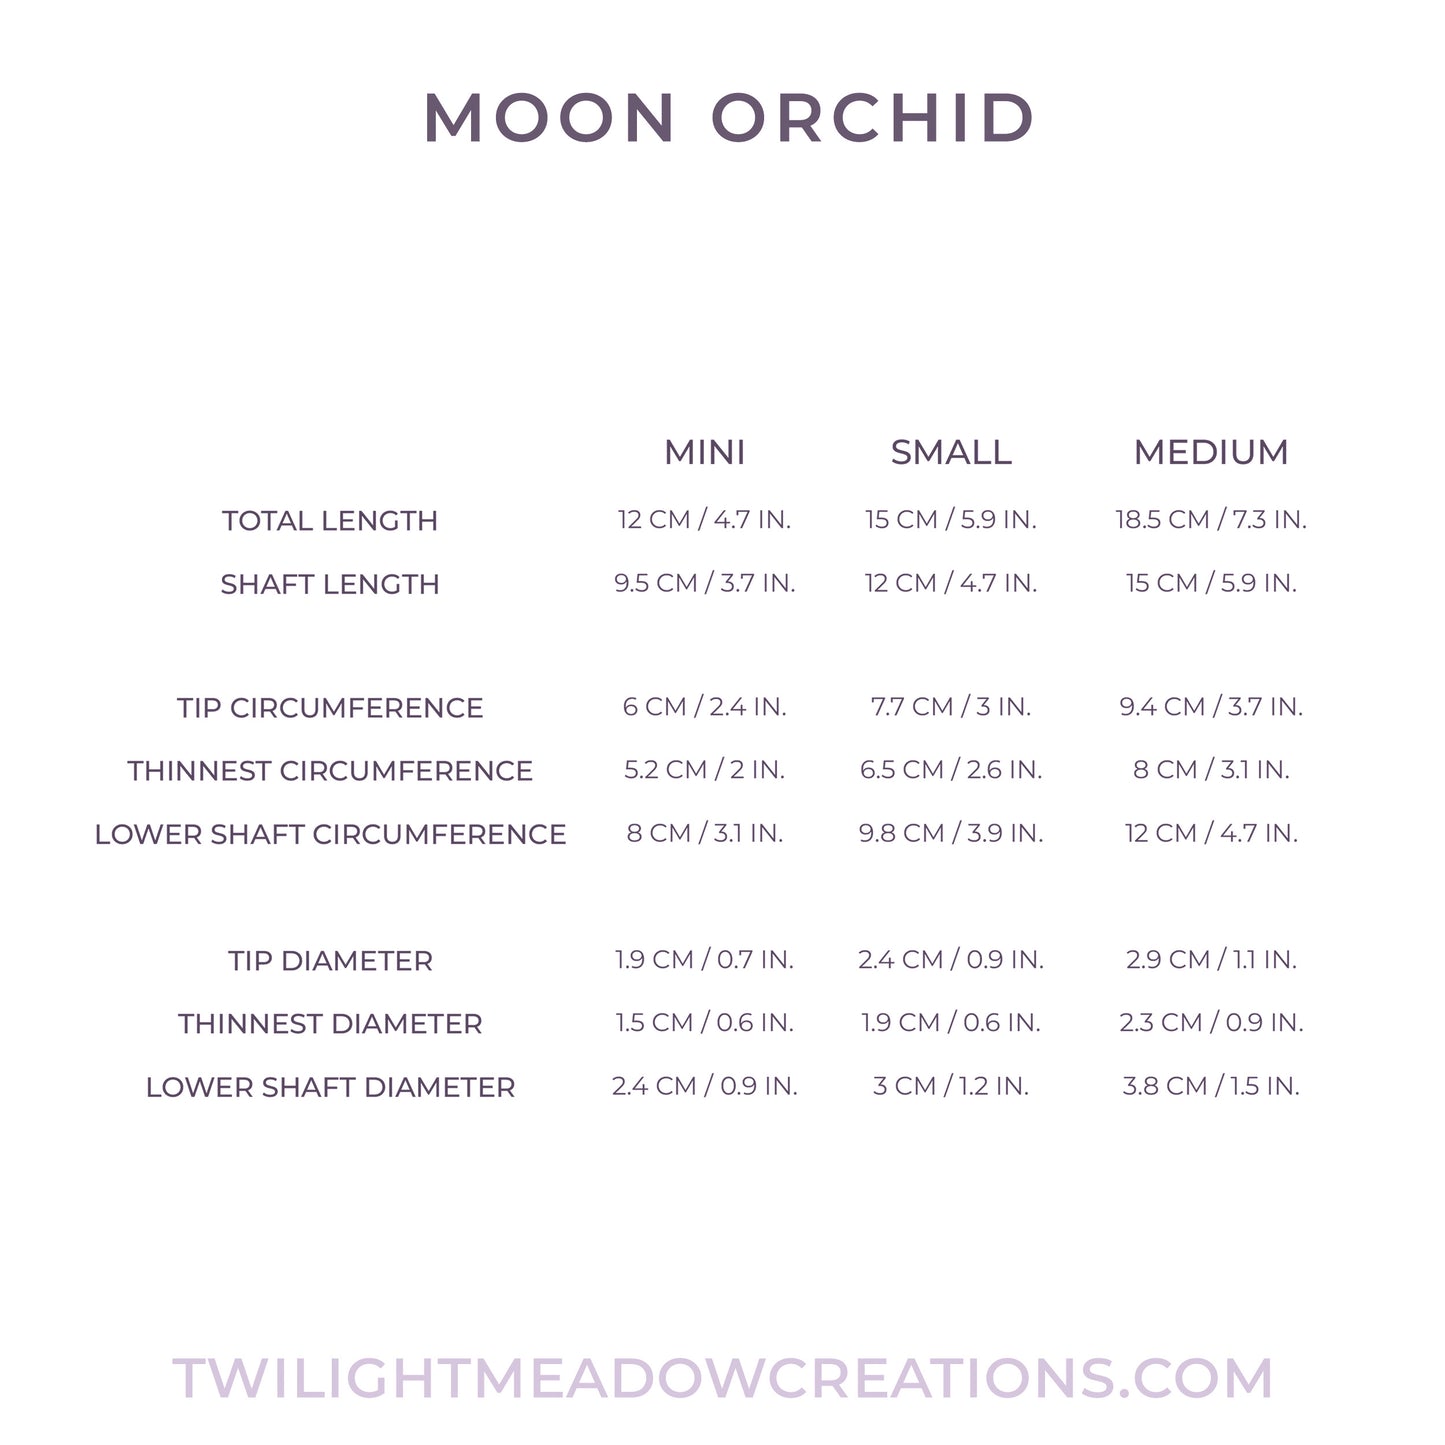 Small Moon Orchid (Firmness: Medium)